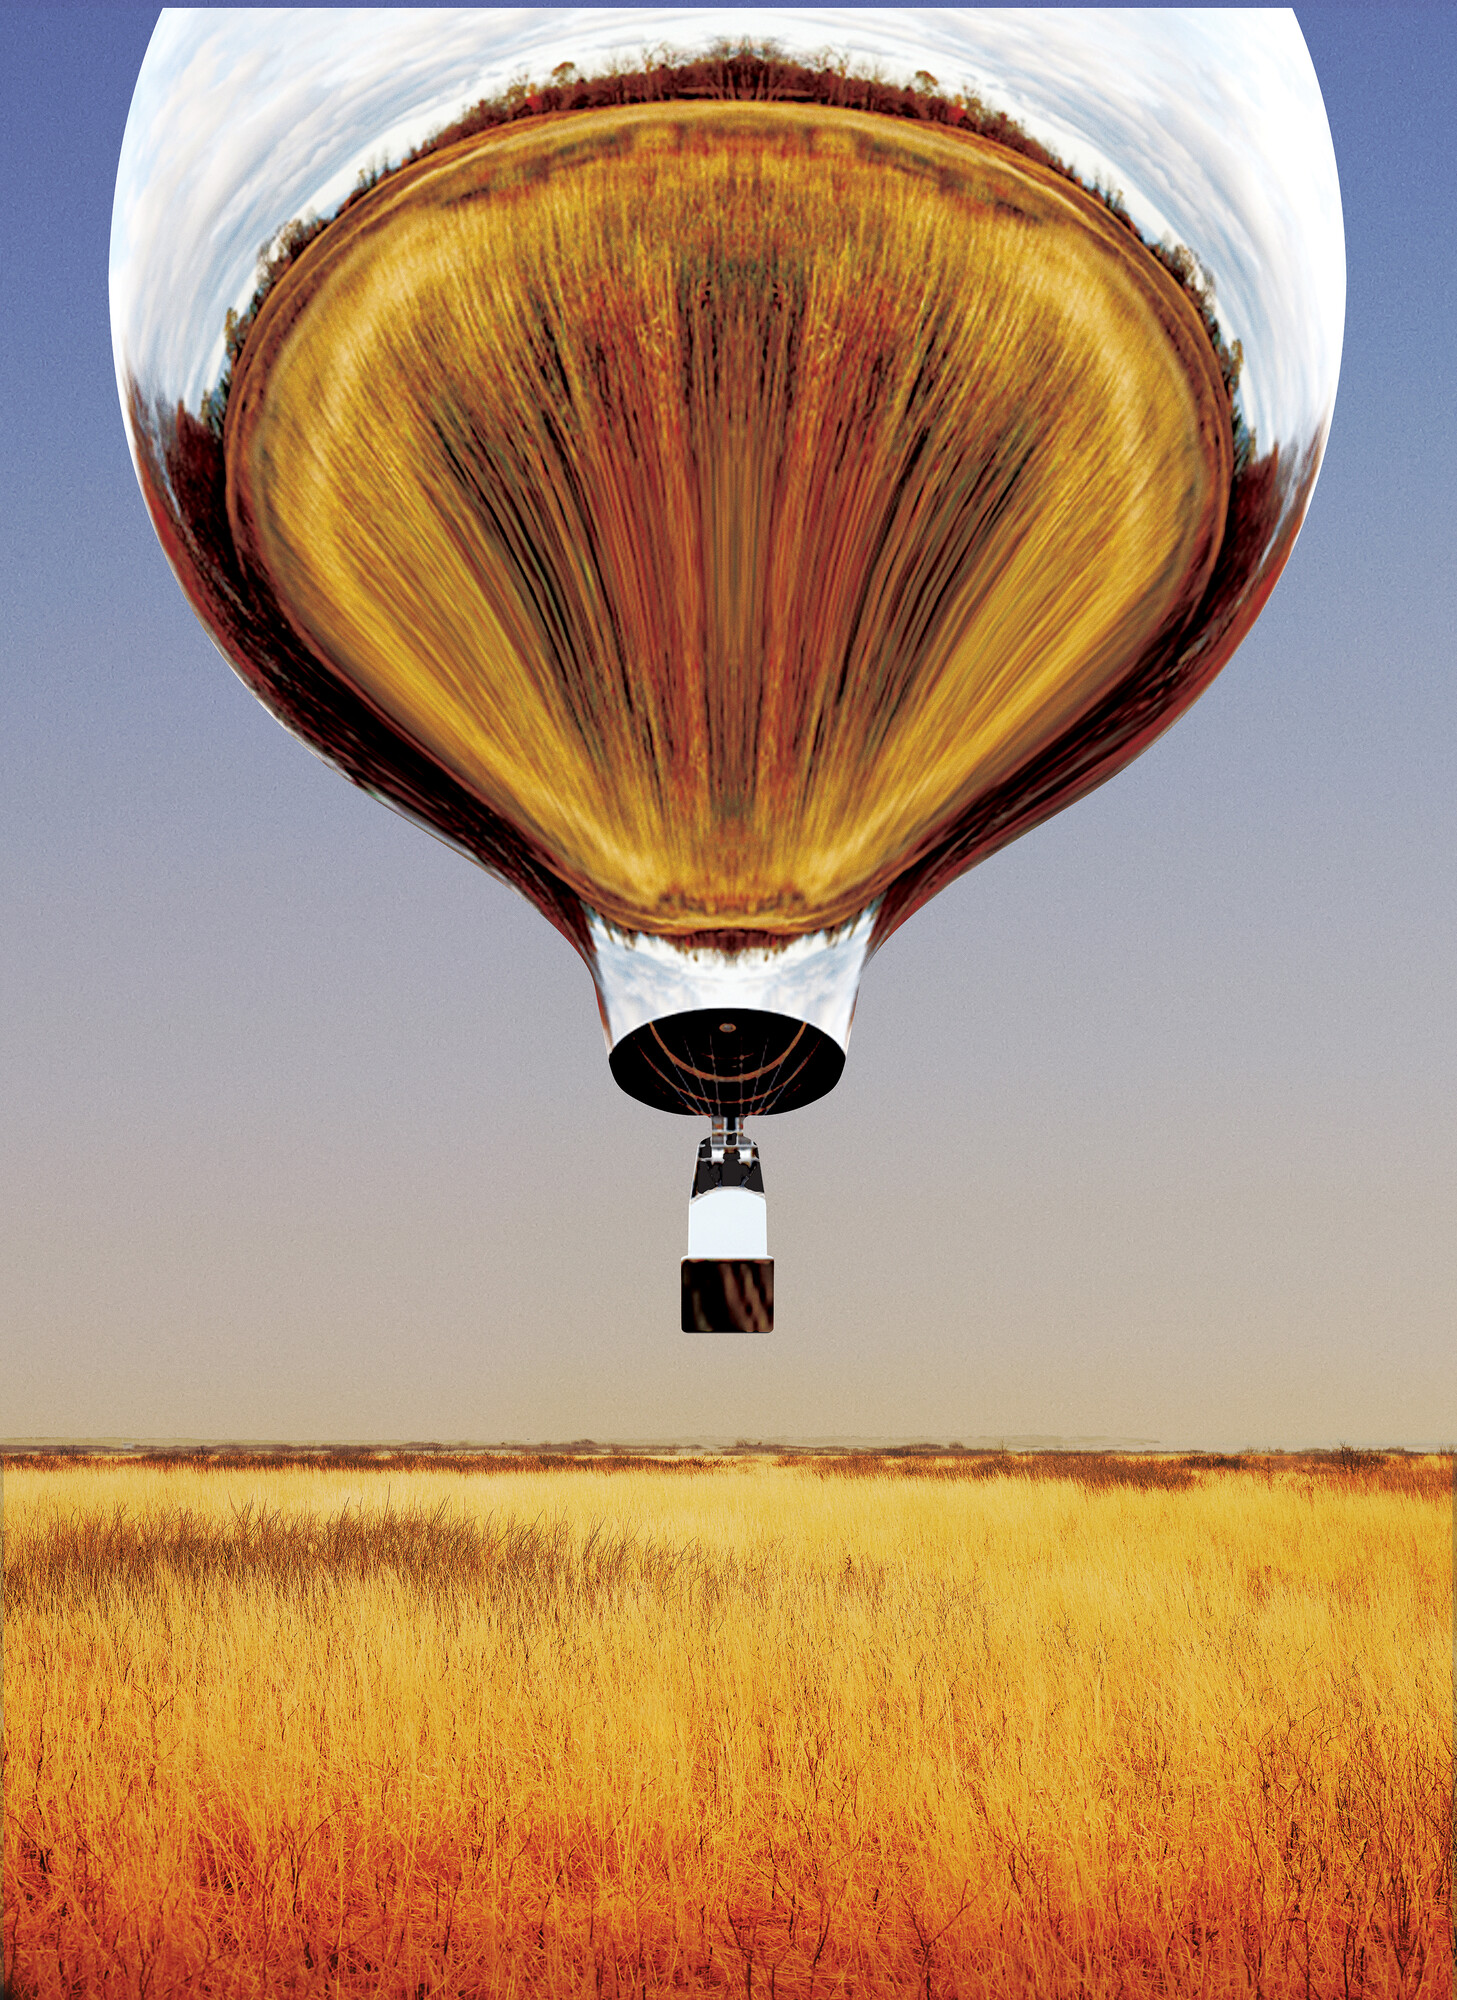 doug horizon aitken balloon air vineyard experience flying massachusetts point martha flux interiordesign skies roams rendering comes balloons mirrored courtesy